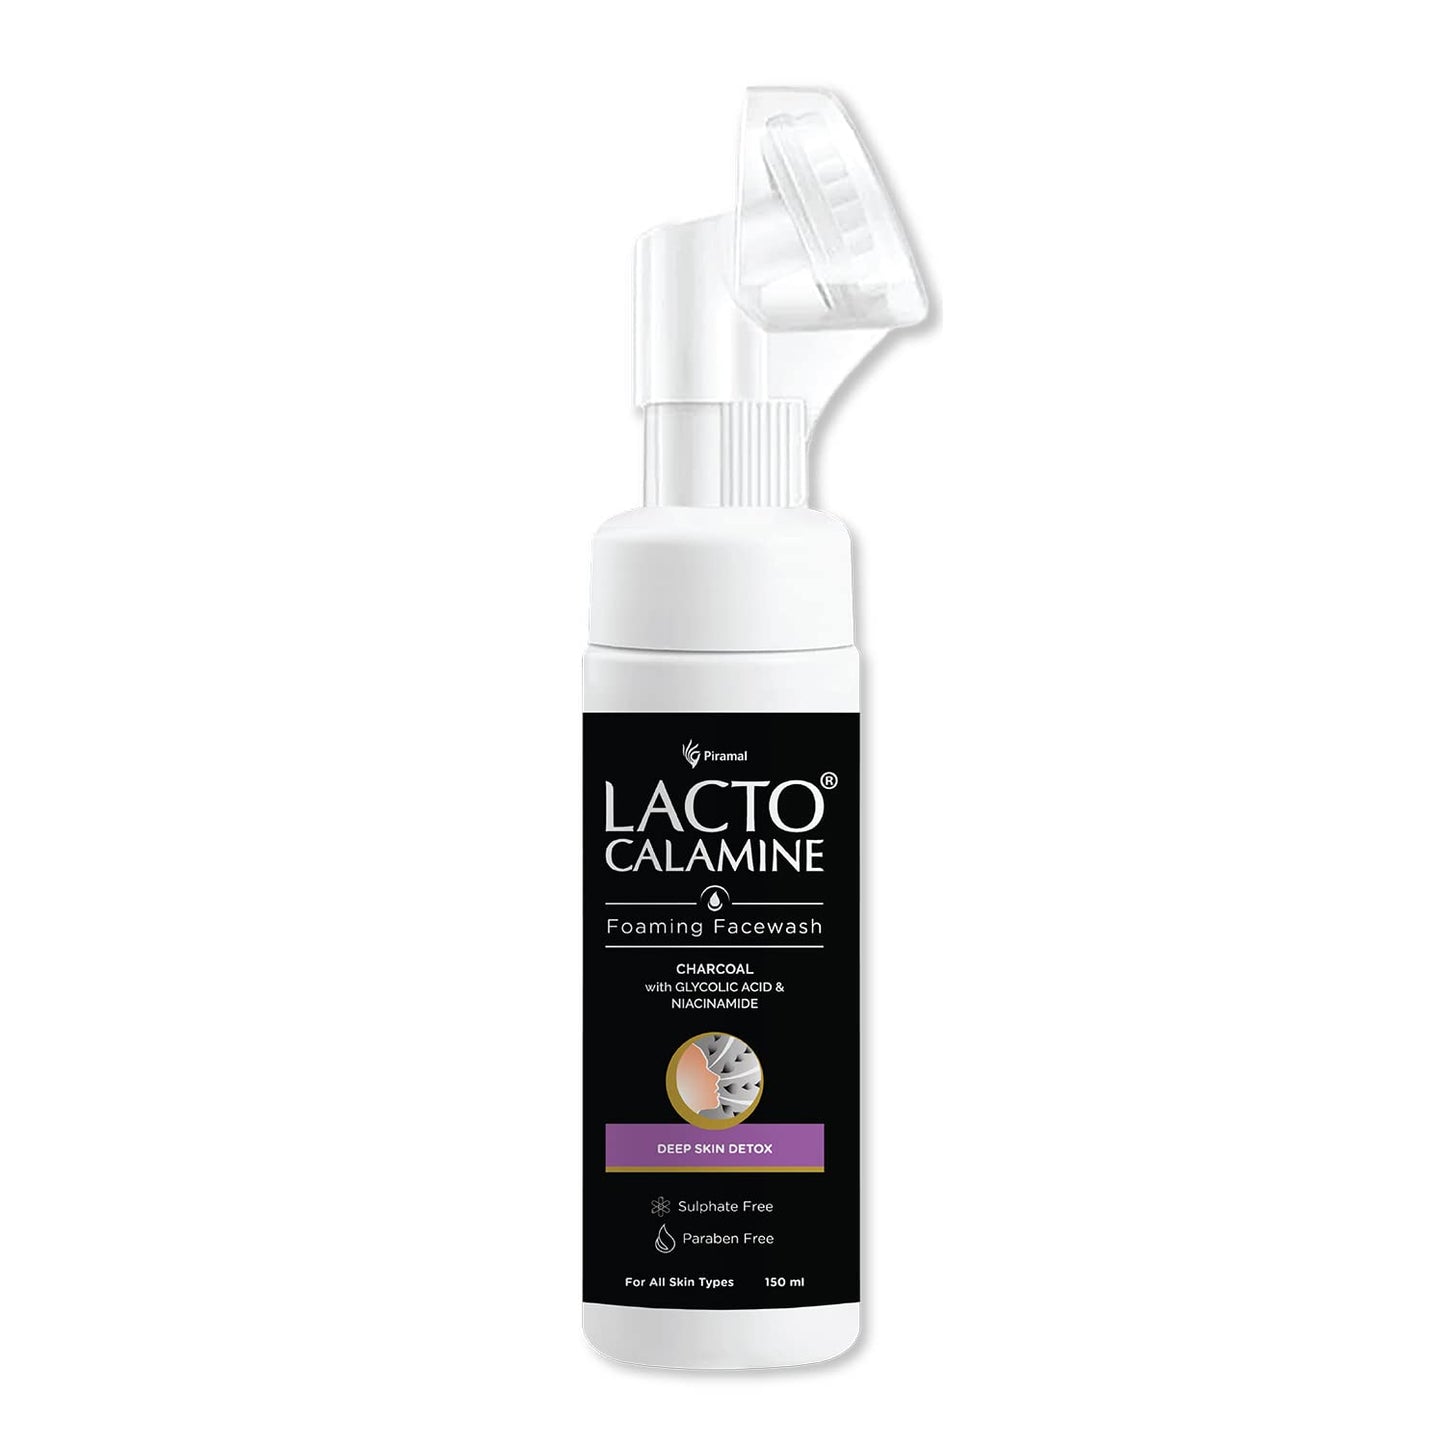 Lacto Calamine Charcoal Foaming Face wash